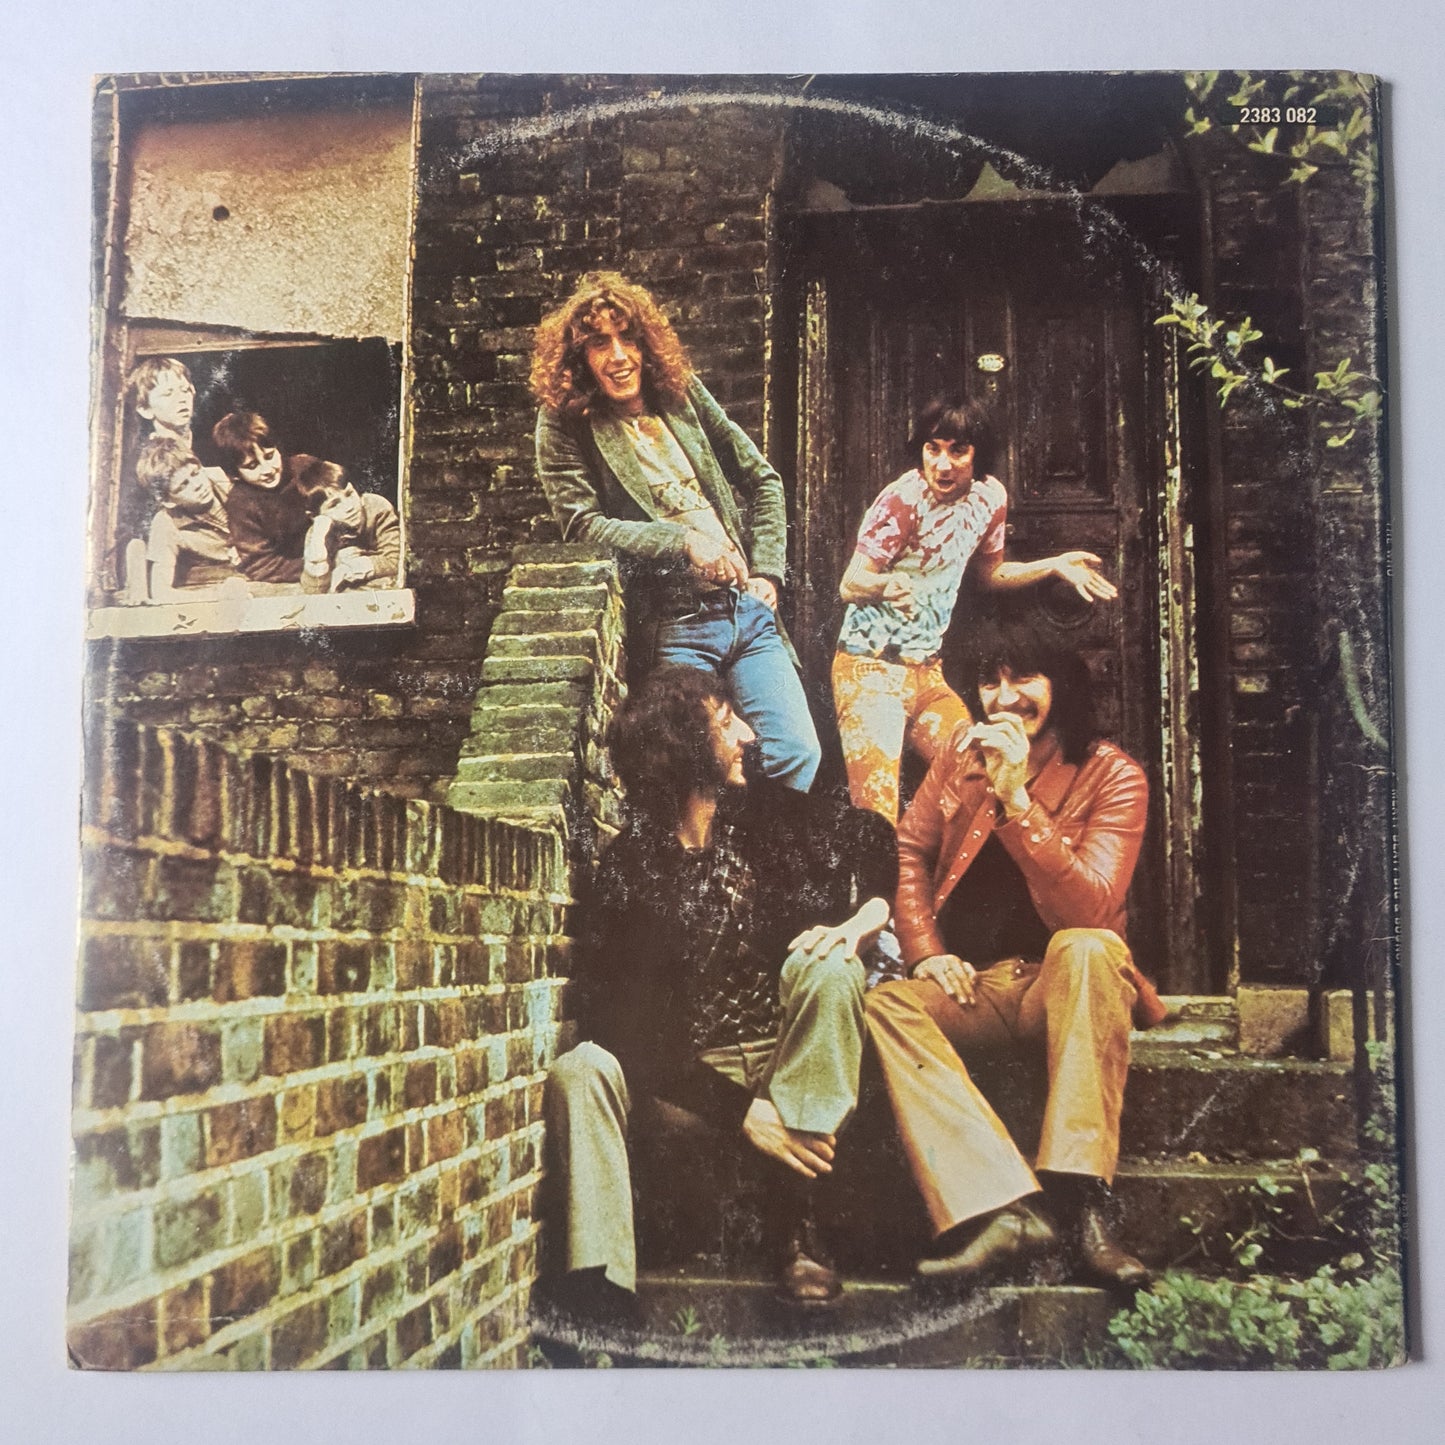 The Who – Meaty Beaty Big & Bouncy (Best Of) - 1971 (Gatefold) - Vinyl Record